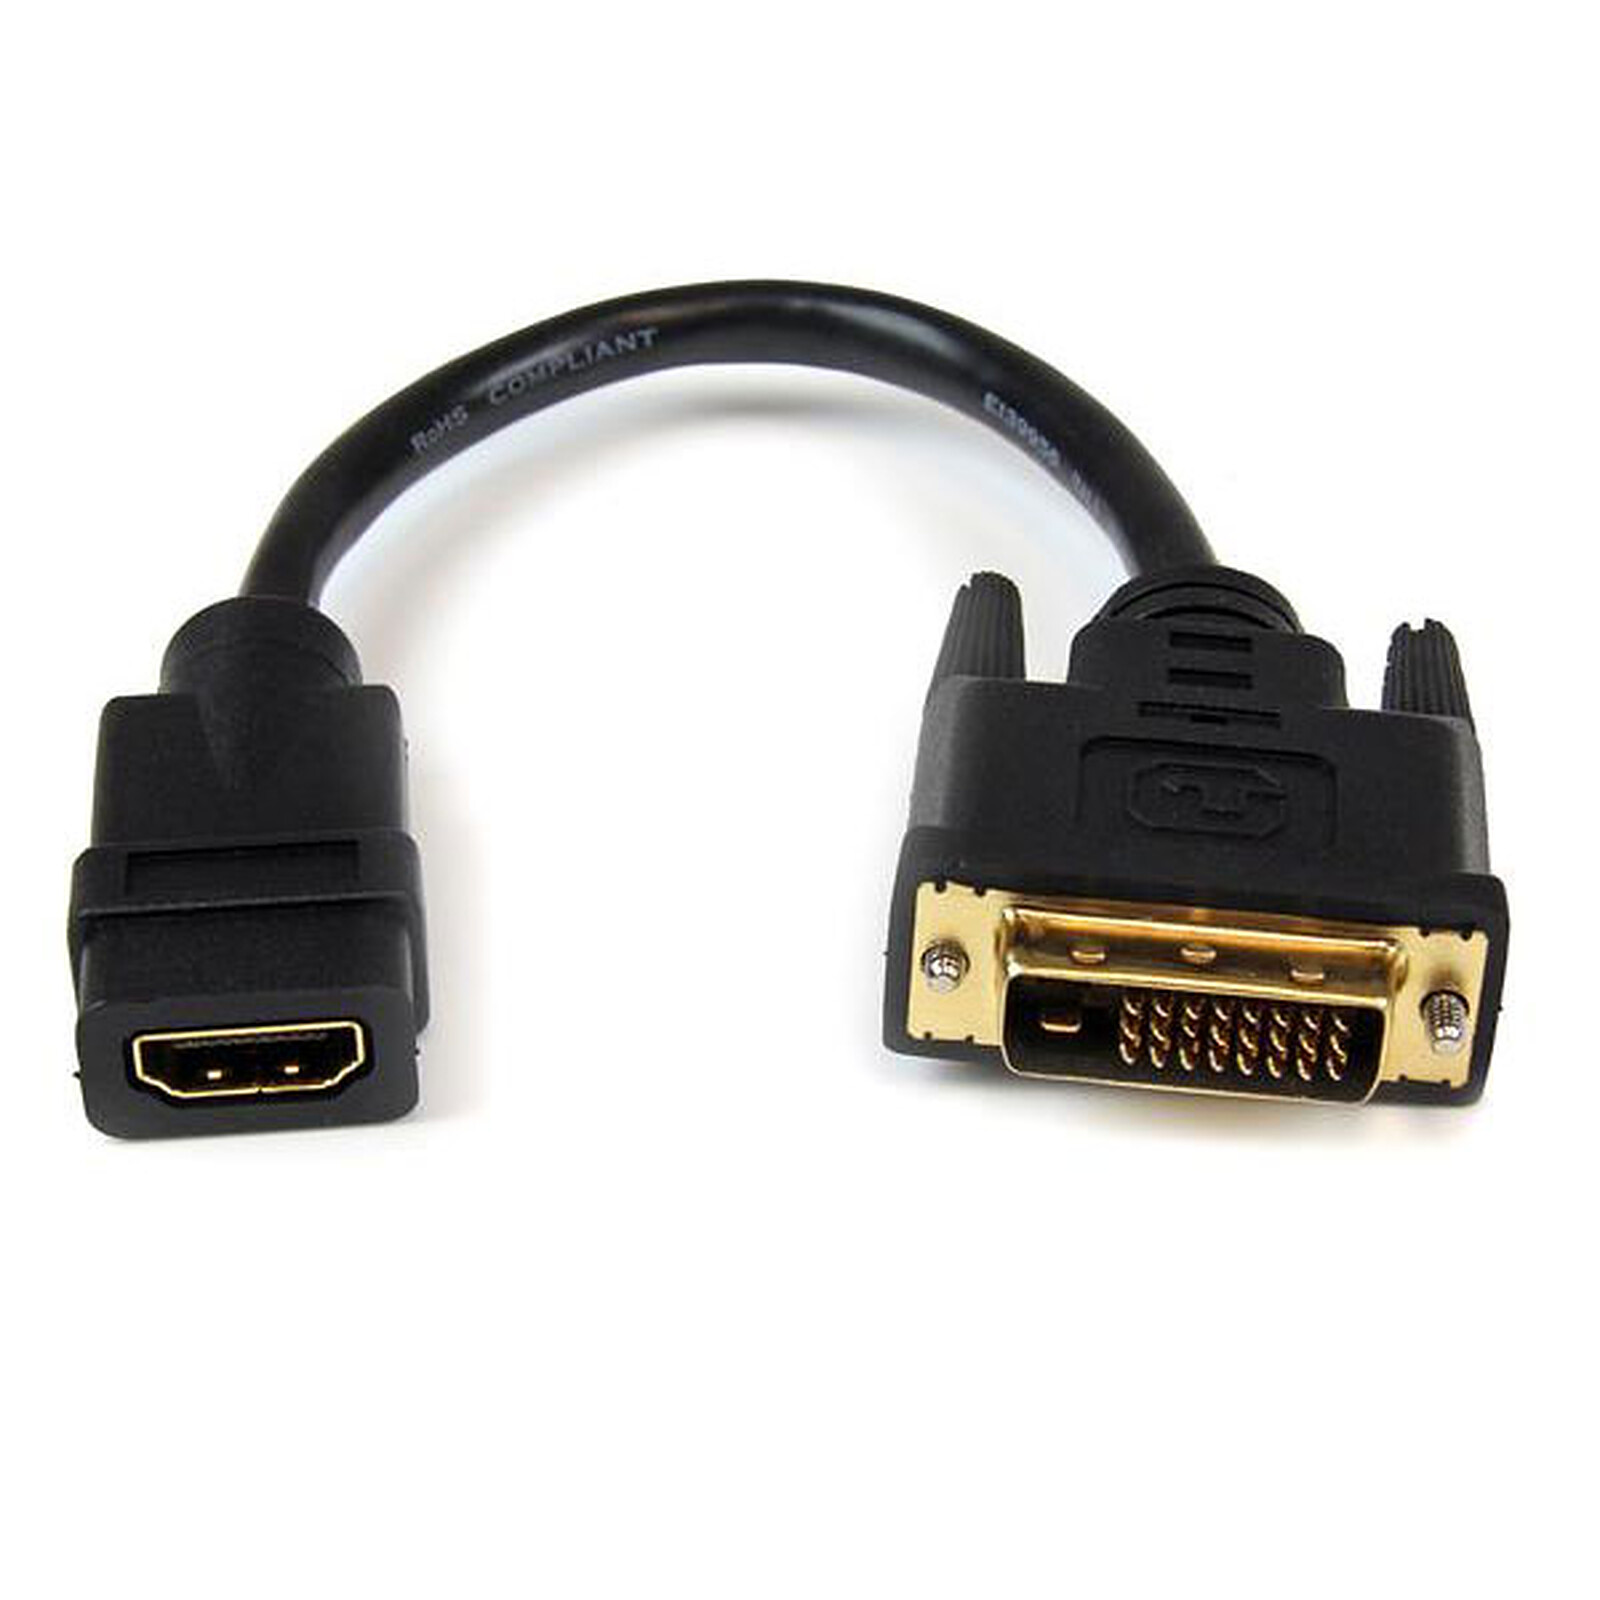 Cable DVI-D Single Link macho / HDMI macho (2 metros) - DVI - LDLC